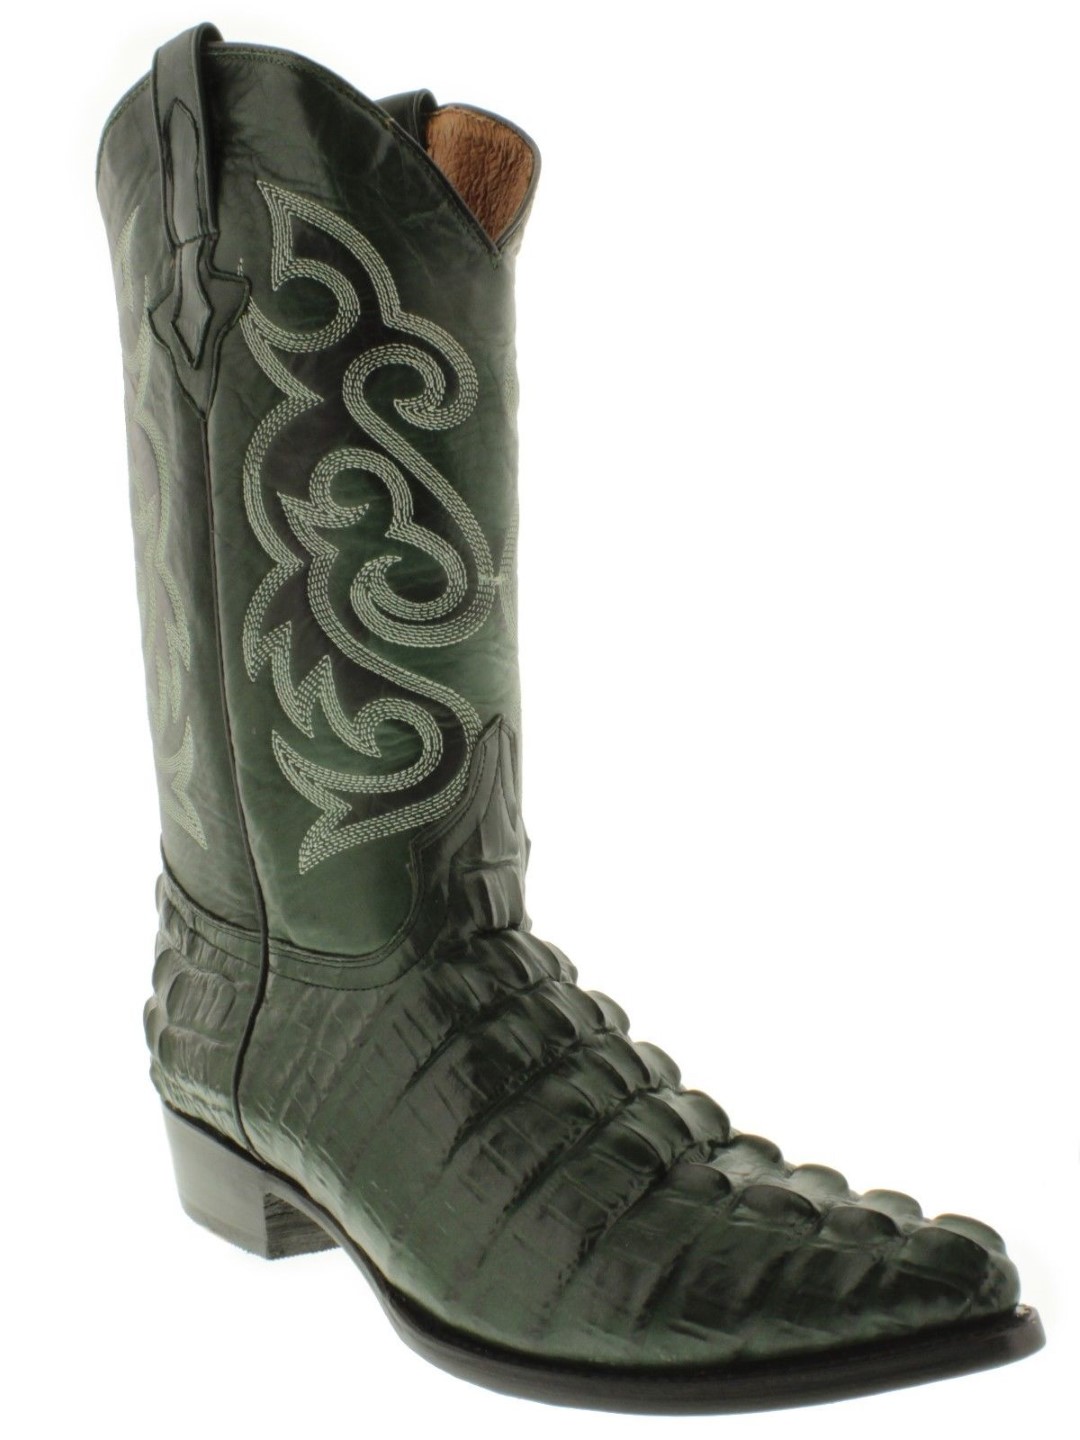 green crocodile boots